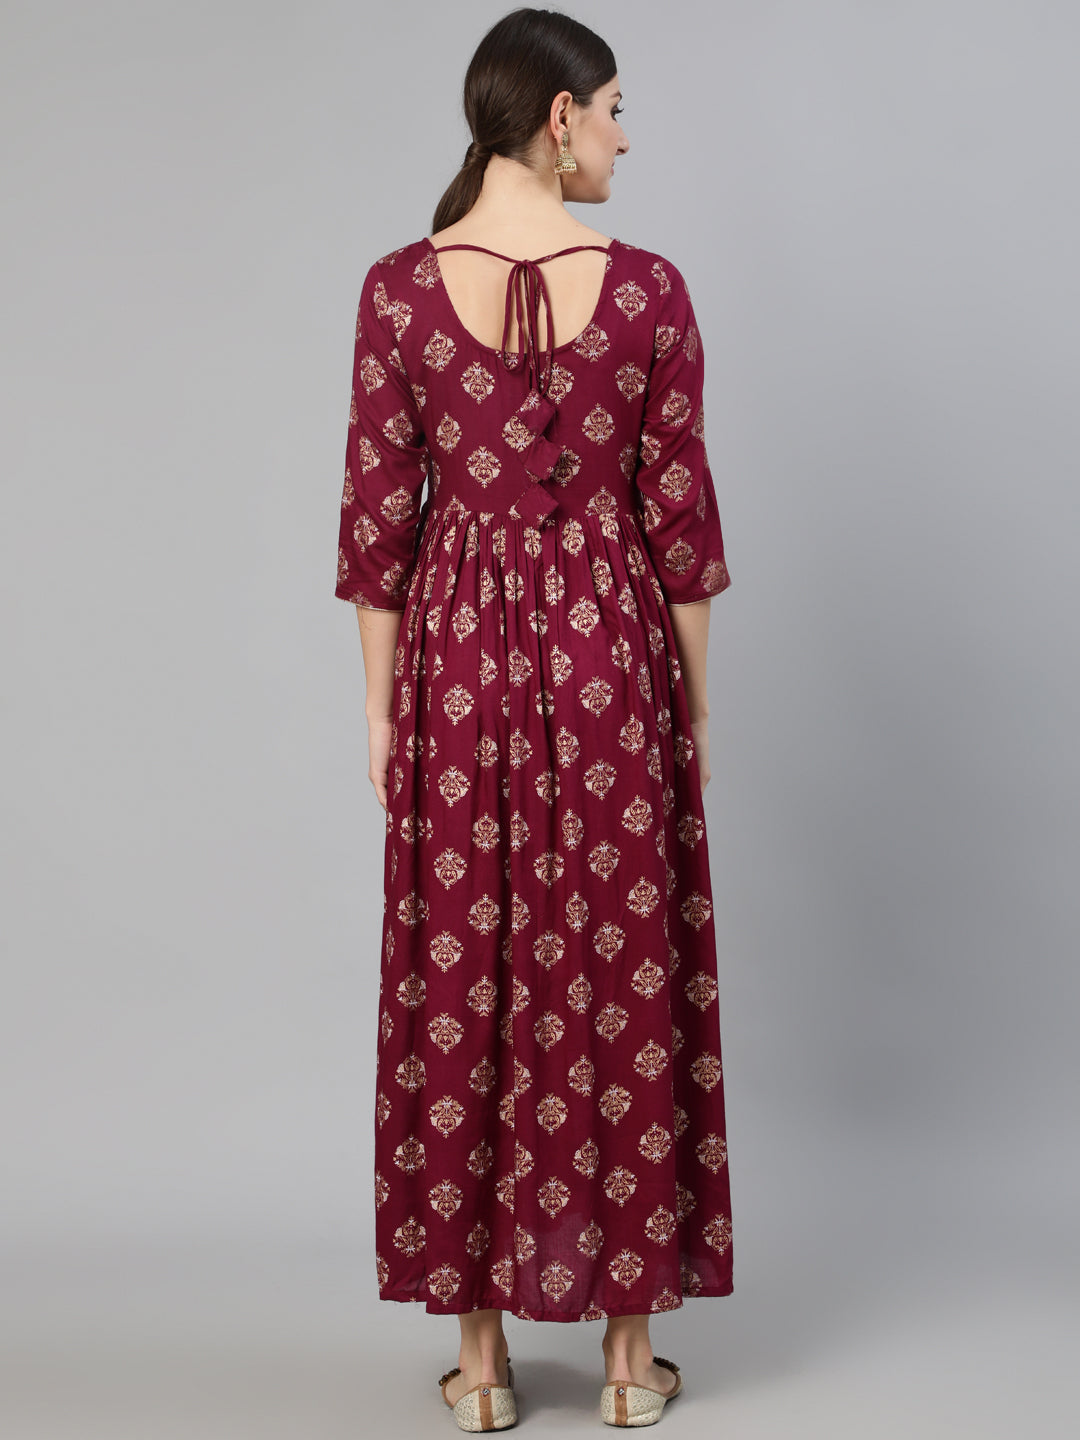 Women's Burgundy Ethnic Printed Dress With Three Quarter Sleeves - Nayo Clothing